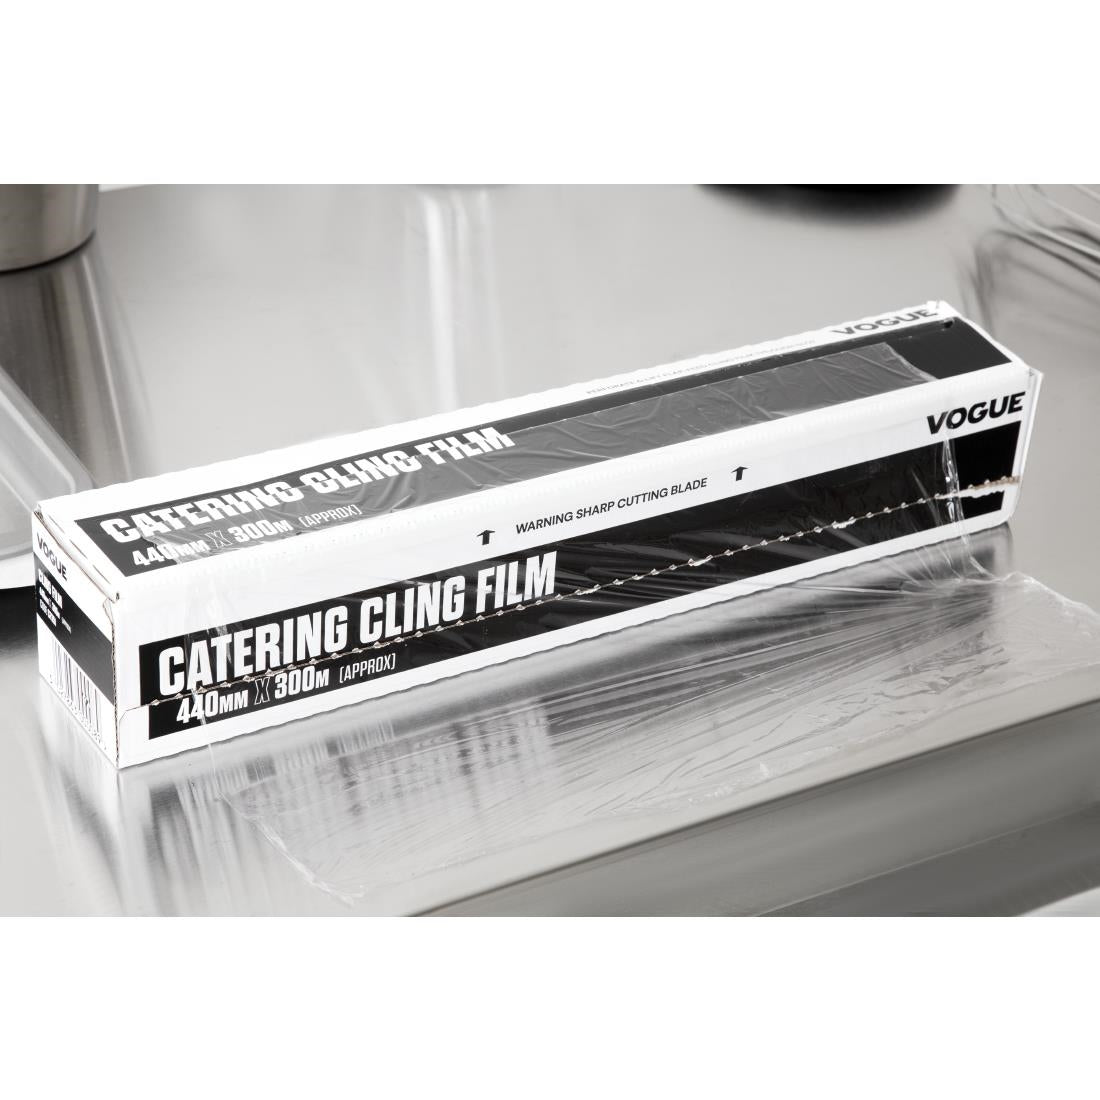 CF351 EDLP Vogue Cutter Box Cling Film - 440mm x 300m JD Catering Equipment Solutions Ltd